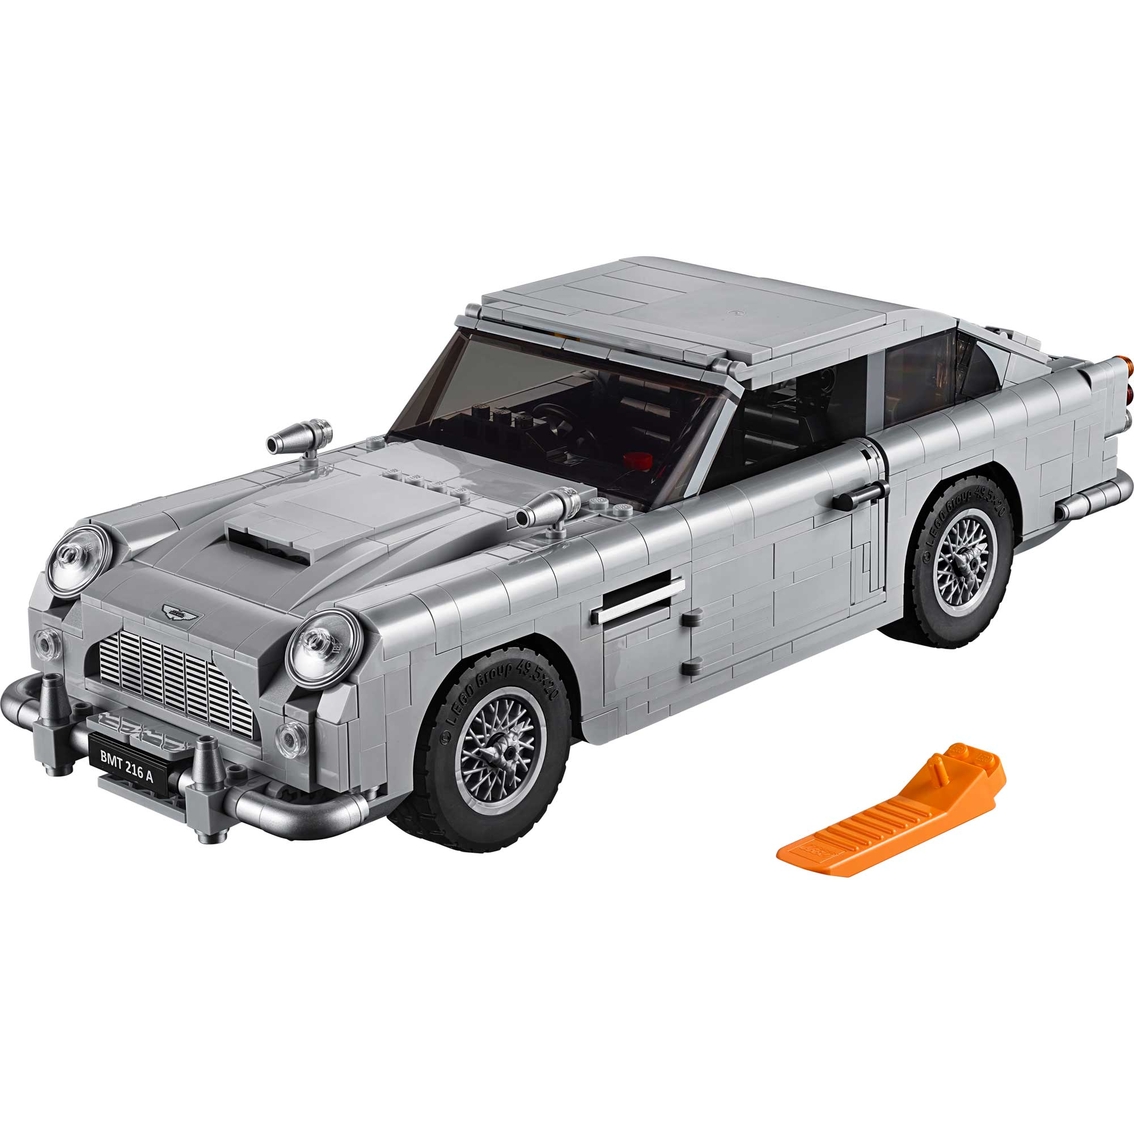 LEGO Creator Expert James Bond Aston Martin DB5 Model 10262 - Image 3 of 3